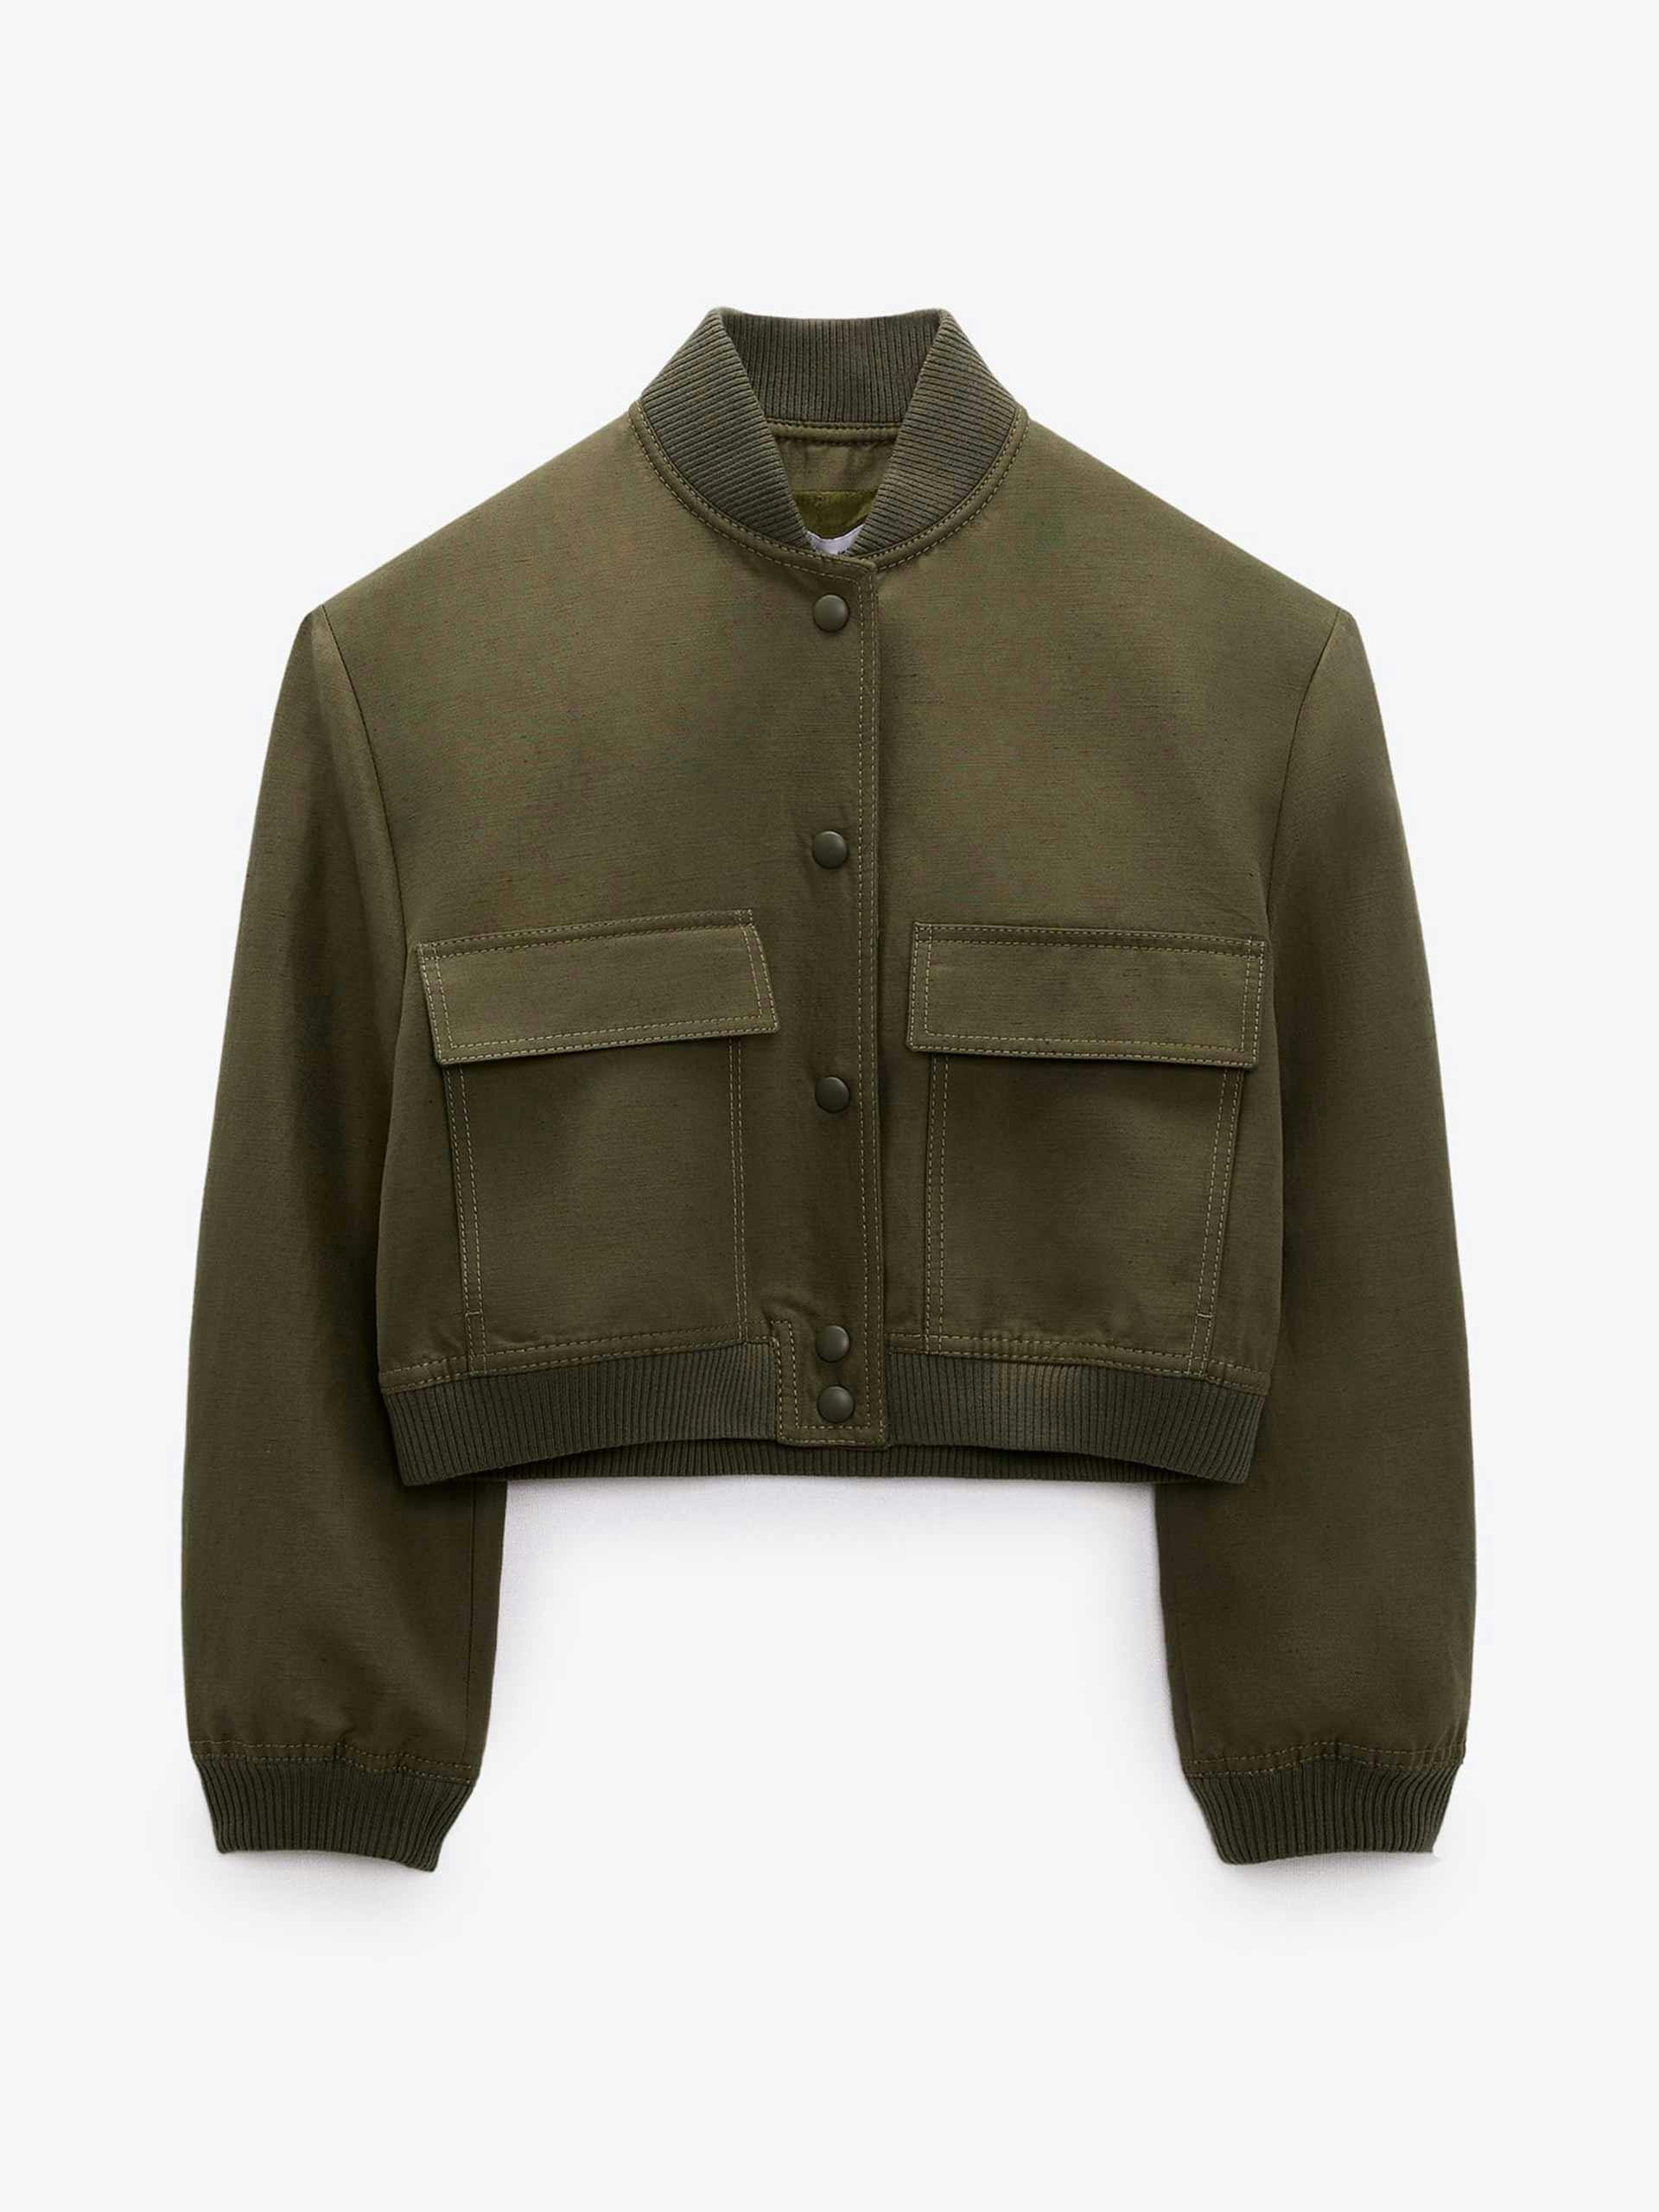 Khaki bomber jacket with pockets